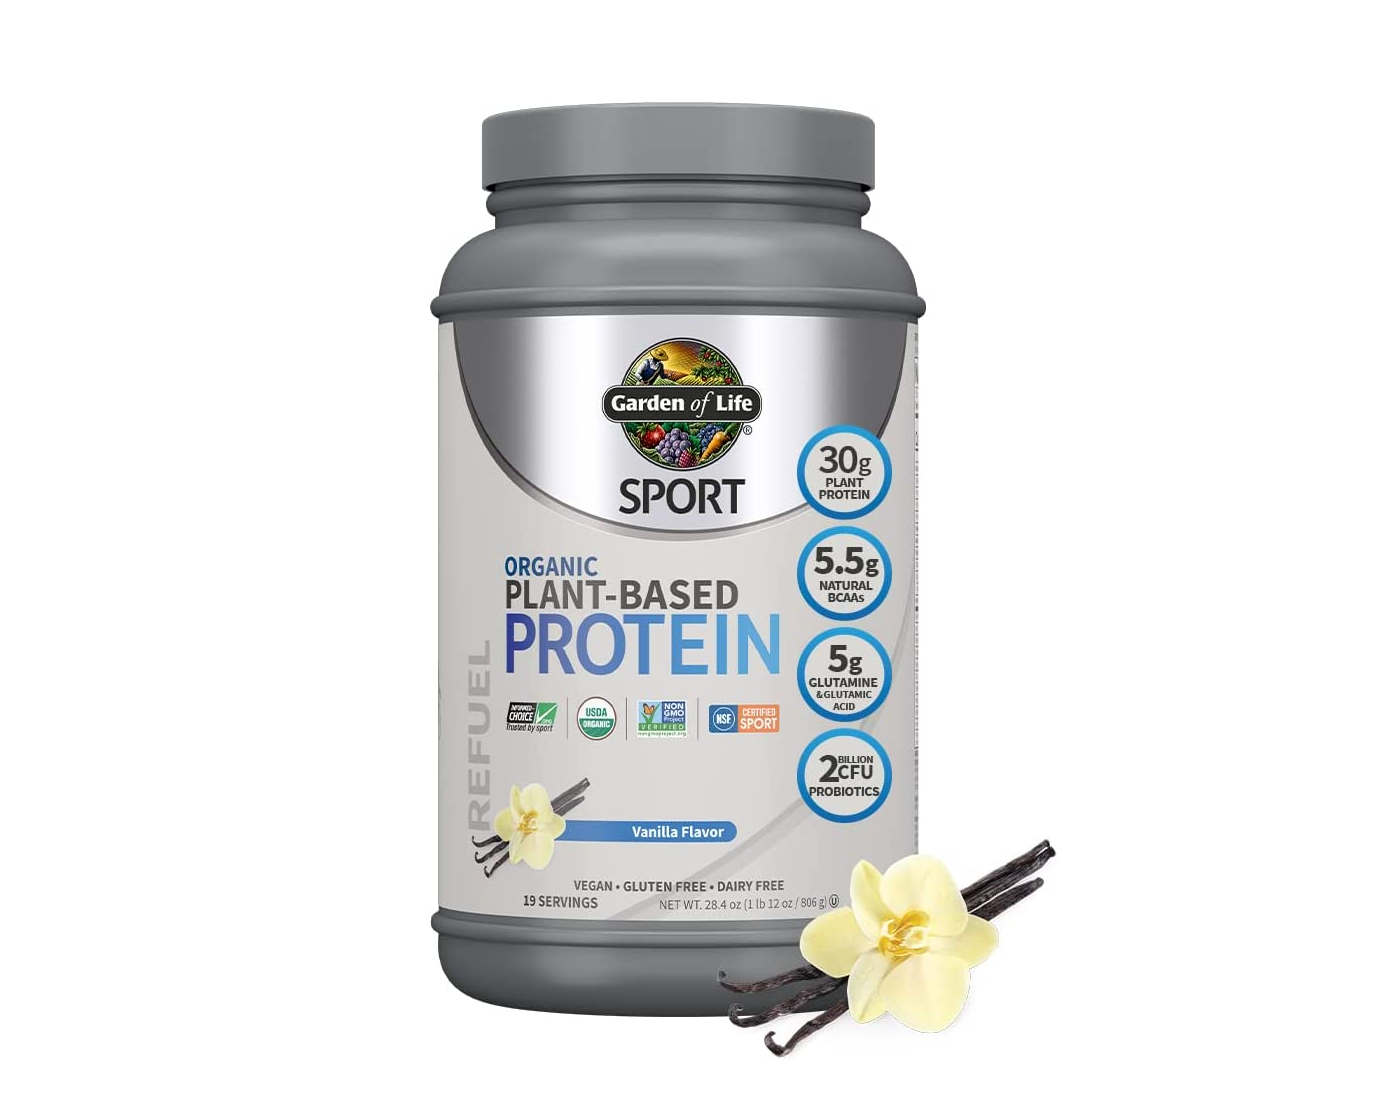 Garden of Life Sport Organic Vegan Protein Powder for Muscle Gain